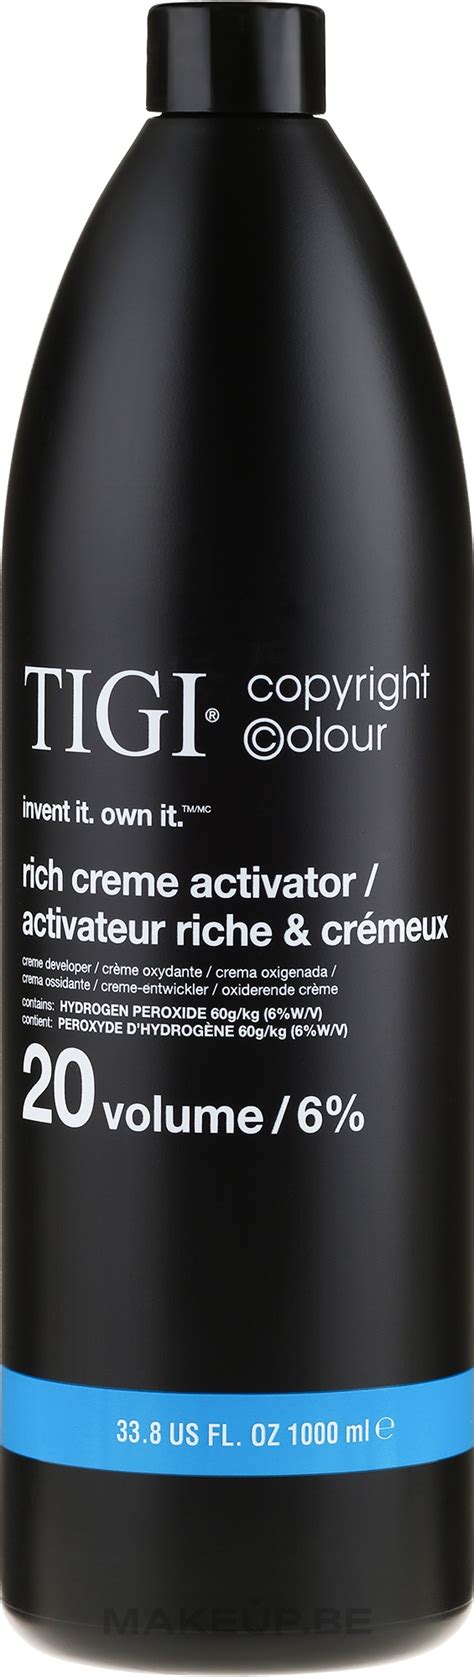 TIGI Colour Activator 20 vol 6 Crème oxydante 6 Makeup be